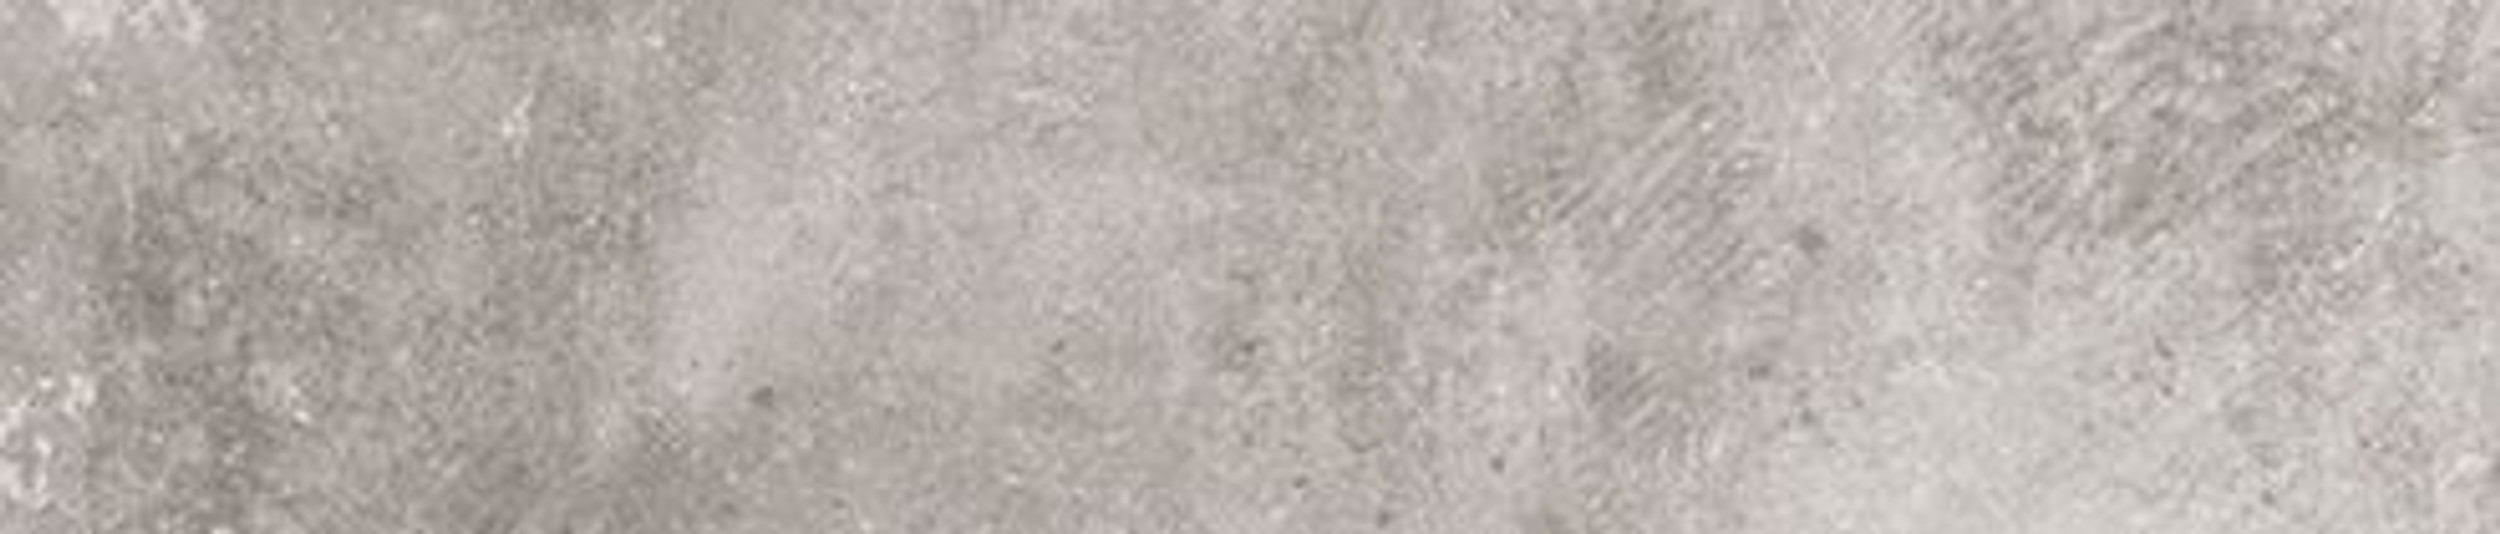 Centuries Panarea Grey 3x24 Battiscopa Bullnose $5.99 ea. (6 Pieces Left)